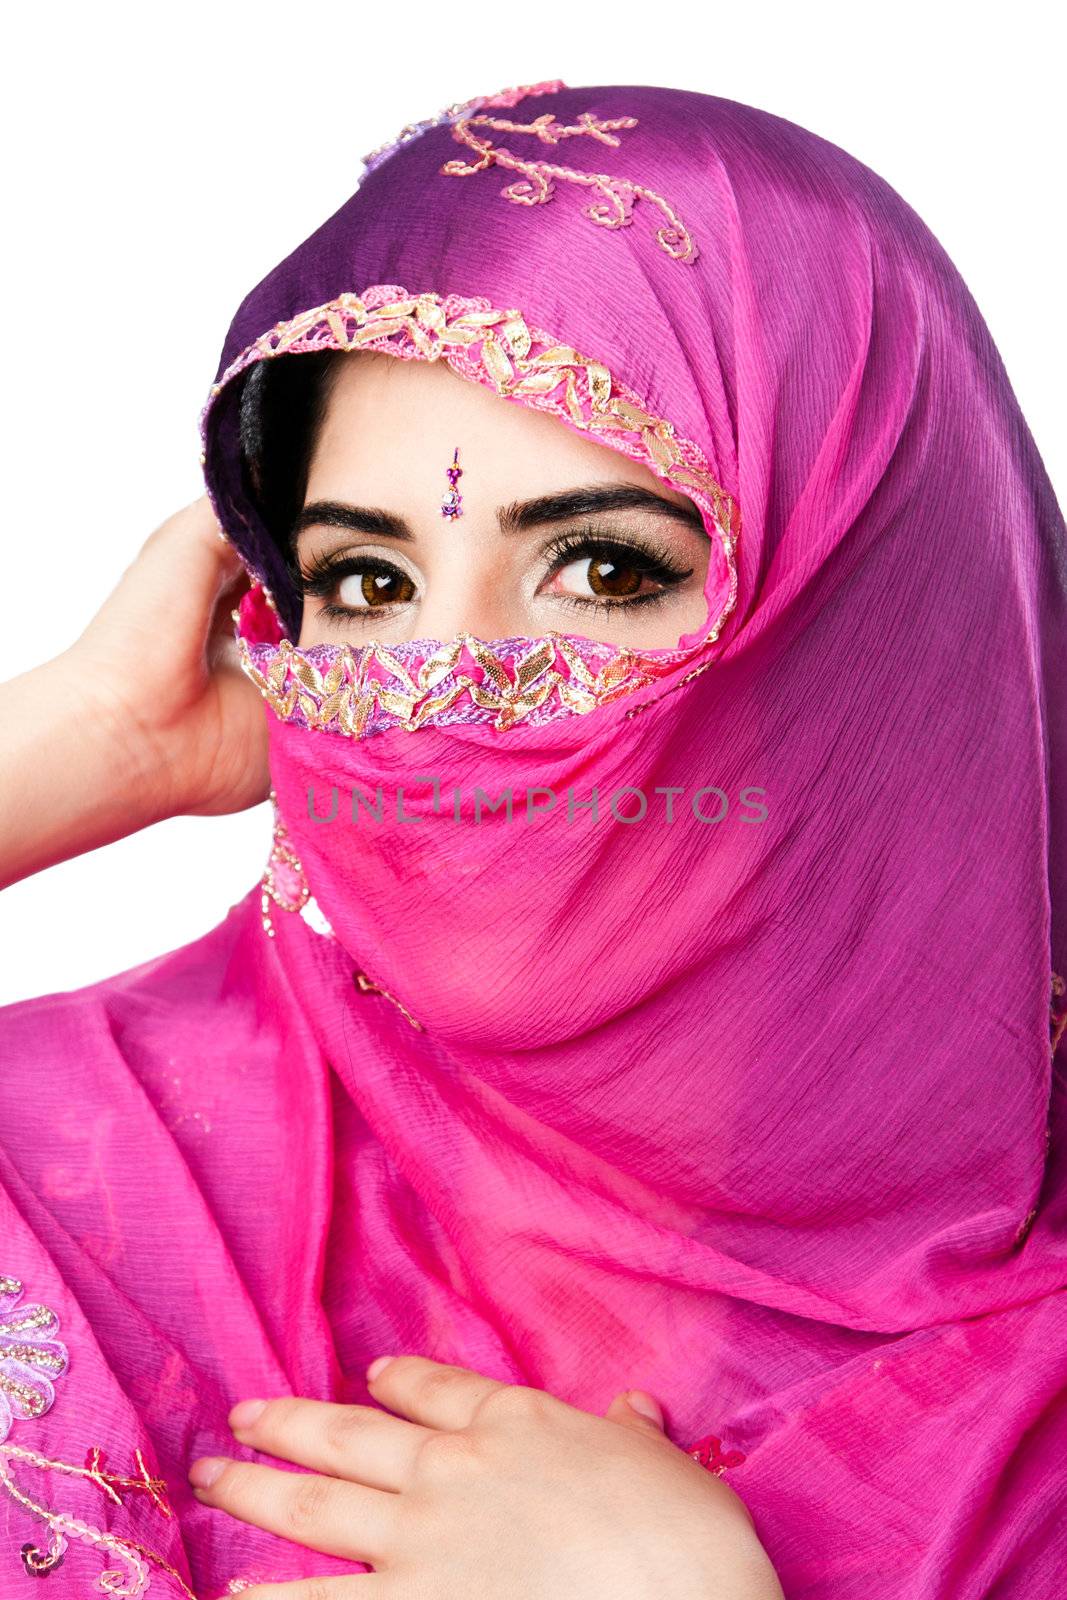 Indian Hindu woman with headscarf by phakimata